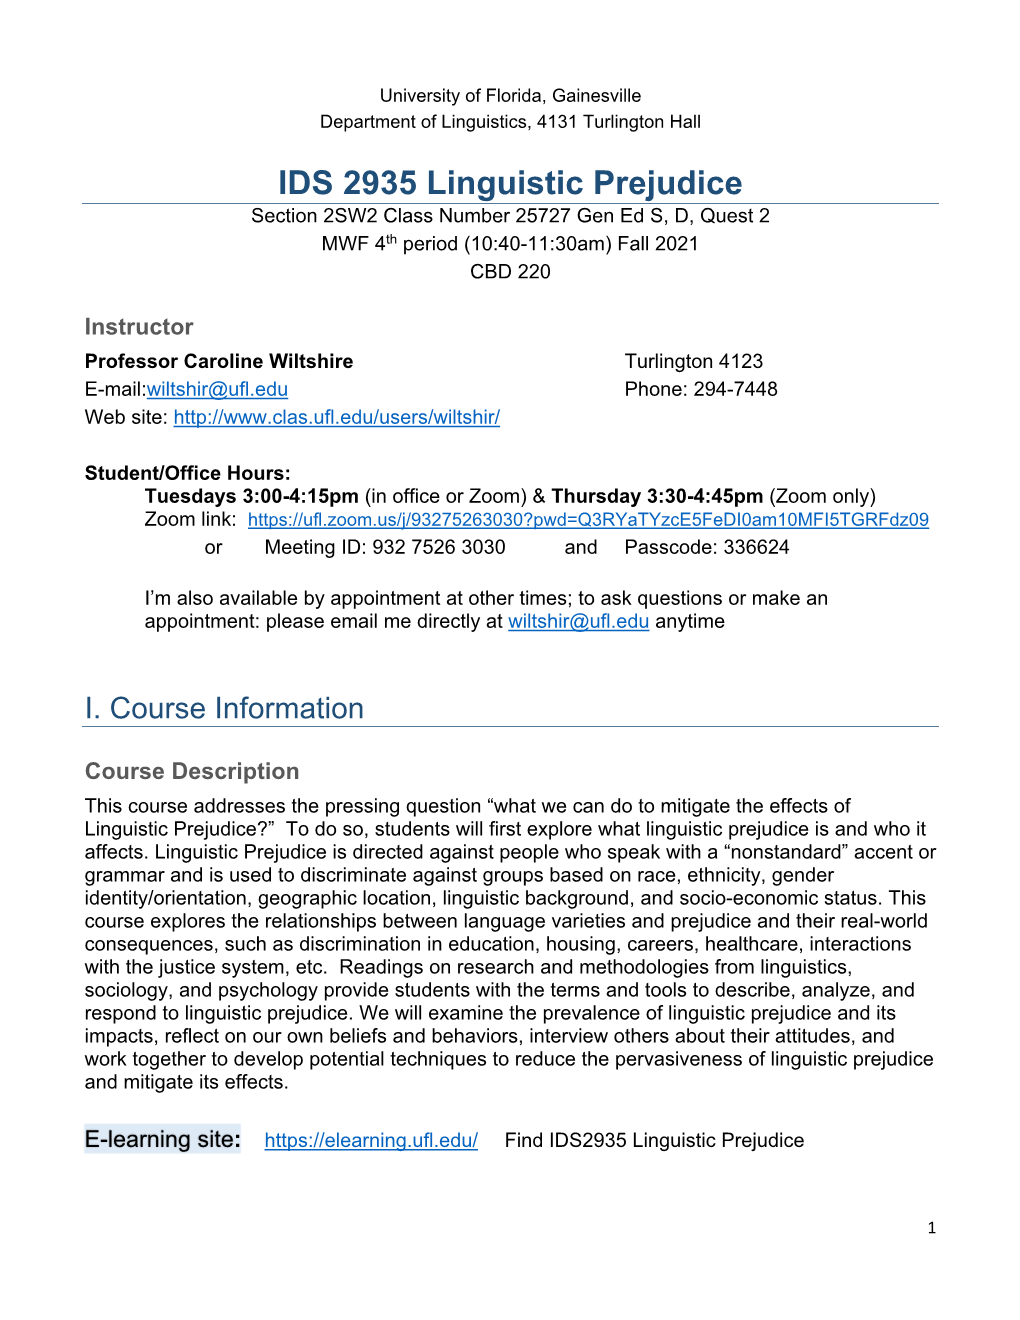 IDS 2935 Linguistic Prejudice Section 2SW2 Class Number 25727 Gen Ed S, D, Quest 2 MWF 4Th Period (10:40-11:30Am) Fall 2021 CBD 220